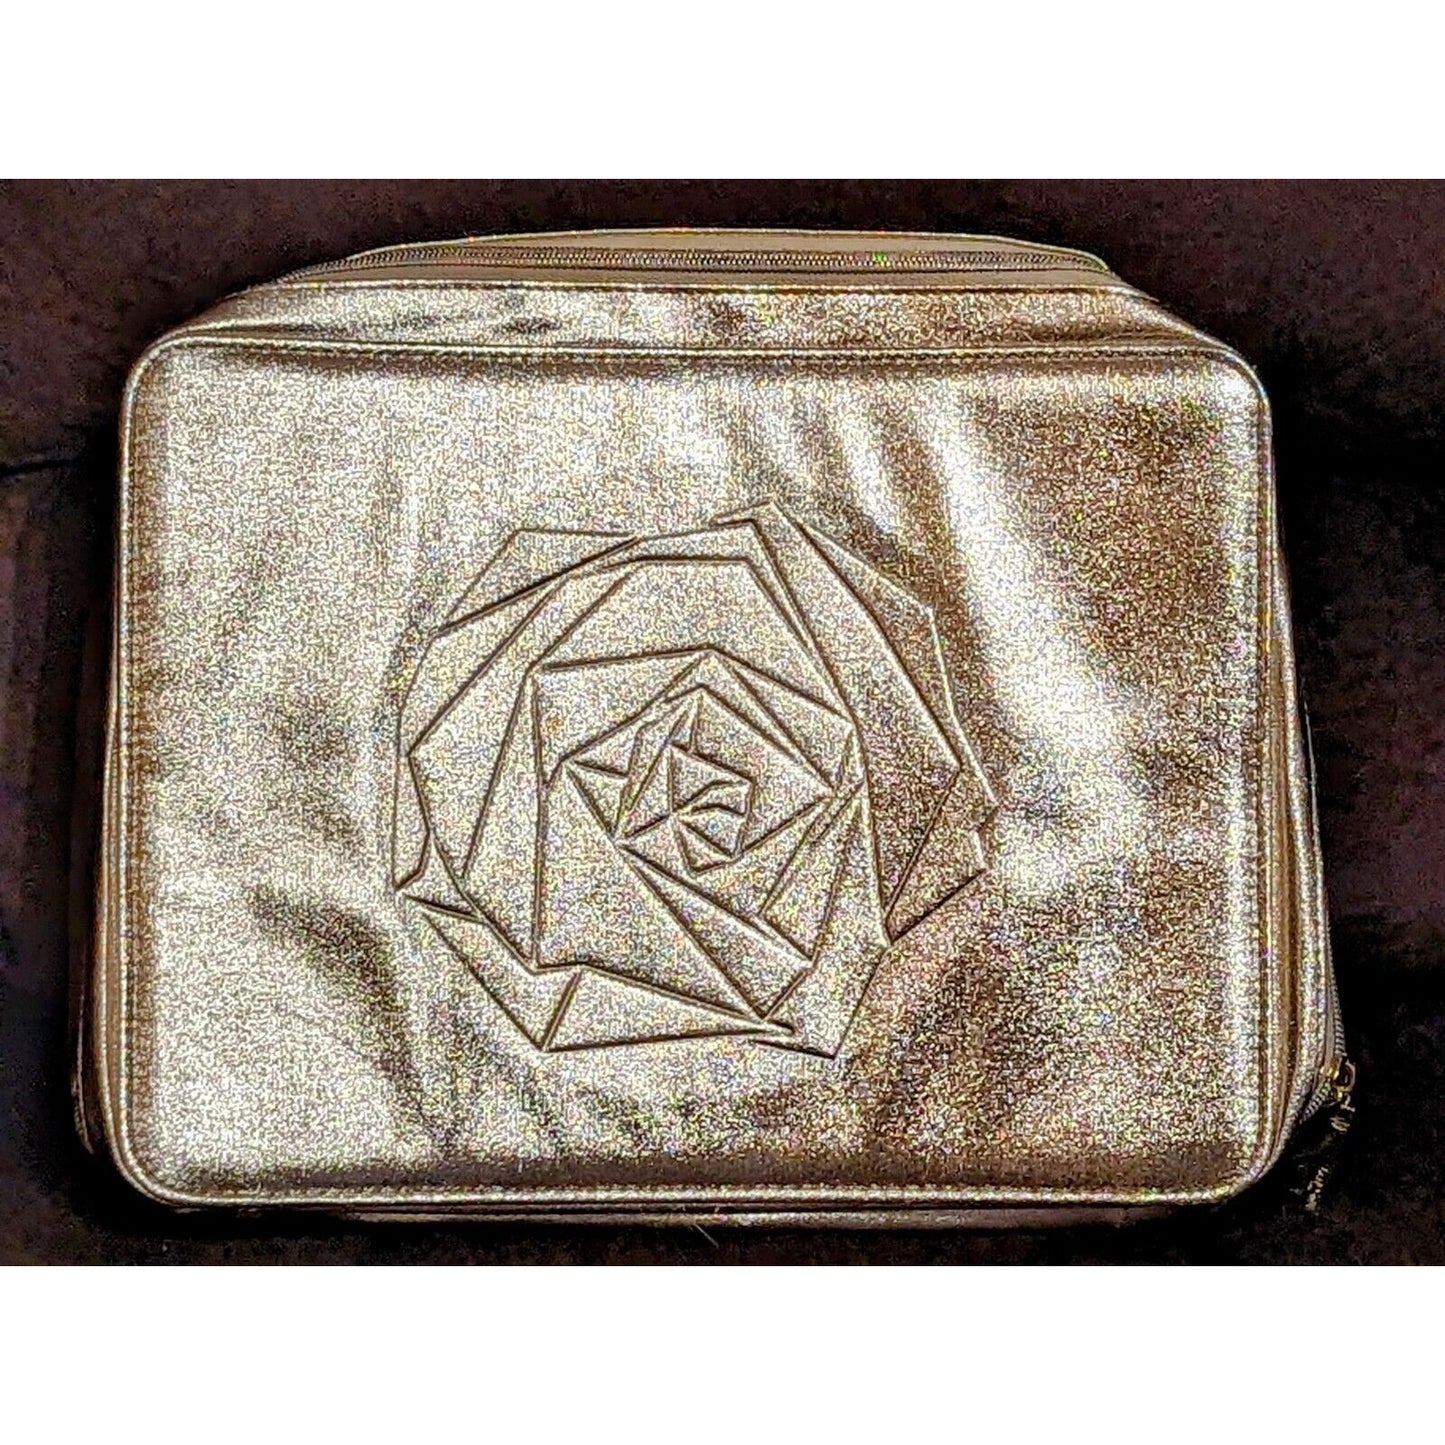 Lancome Cosmetic Makeup Bag Train Case Metallic Gold w/Rose